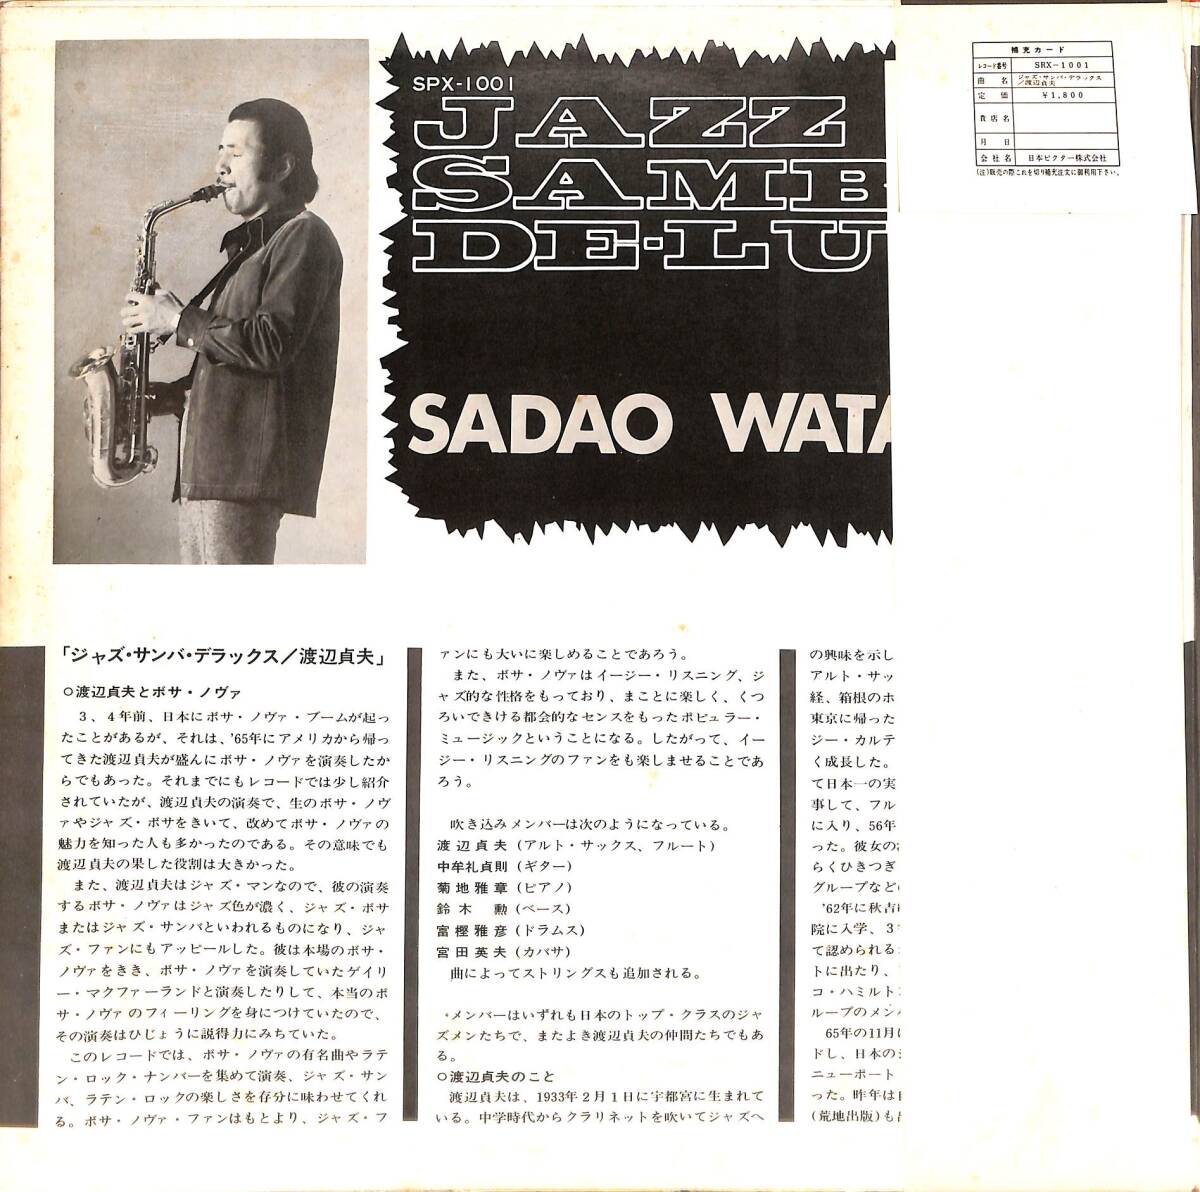 A00593622/LP/渡辺貞夫「Jazz Samba De-Luxe (1970年・SPX-1001・ラテンジャズ・サンバ・SAMBA)」の画像3